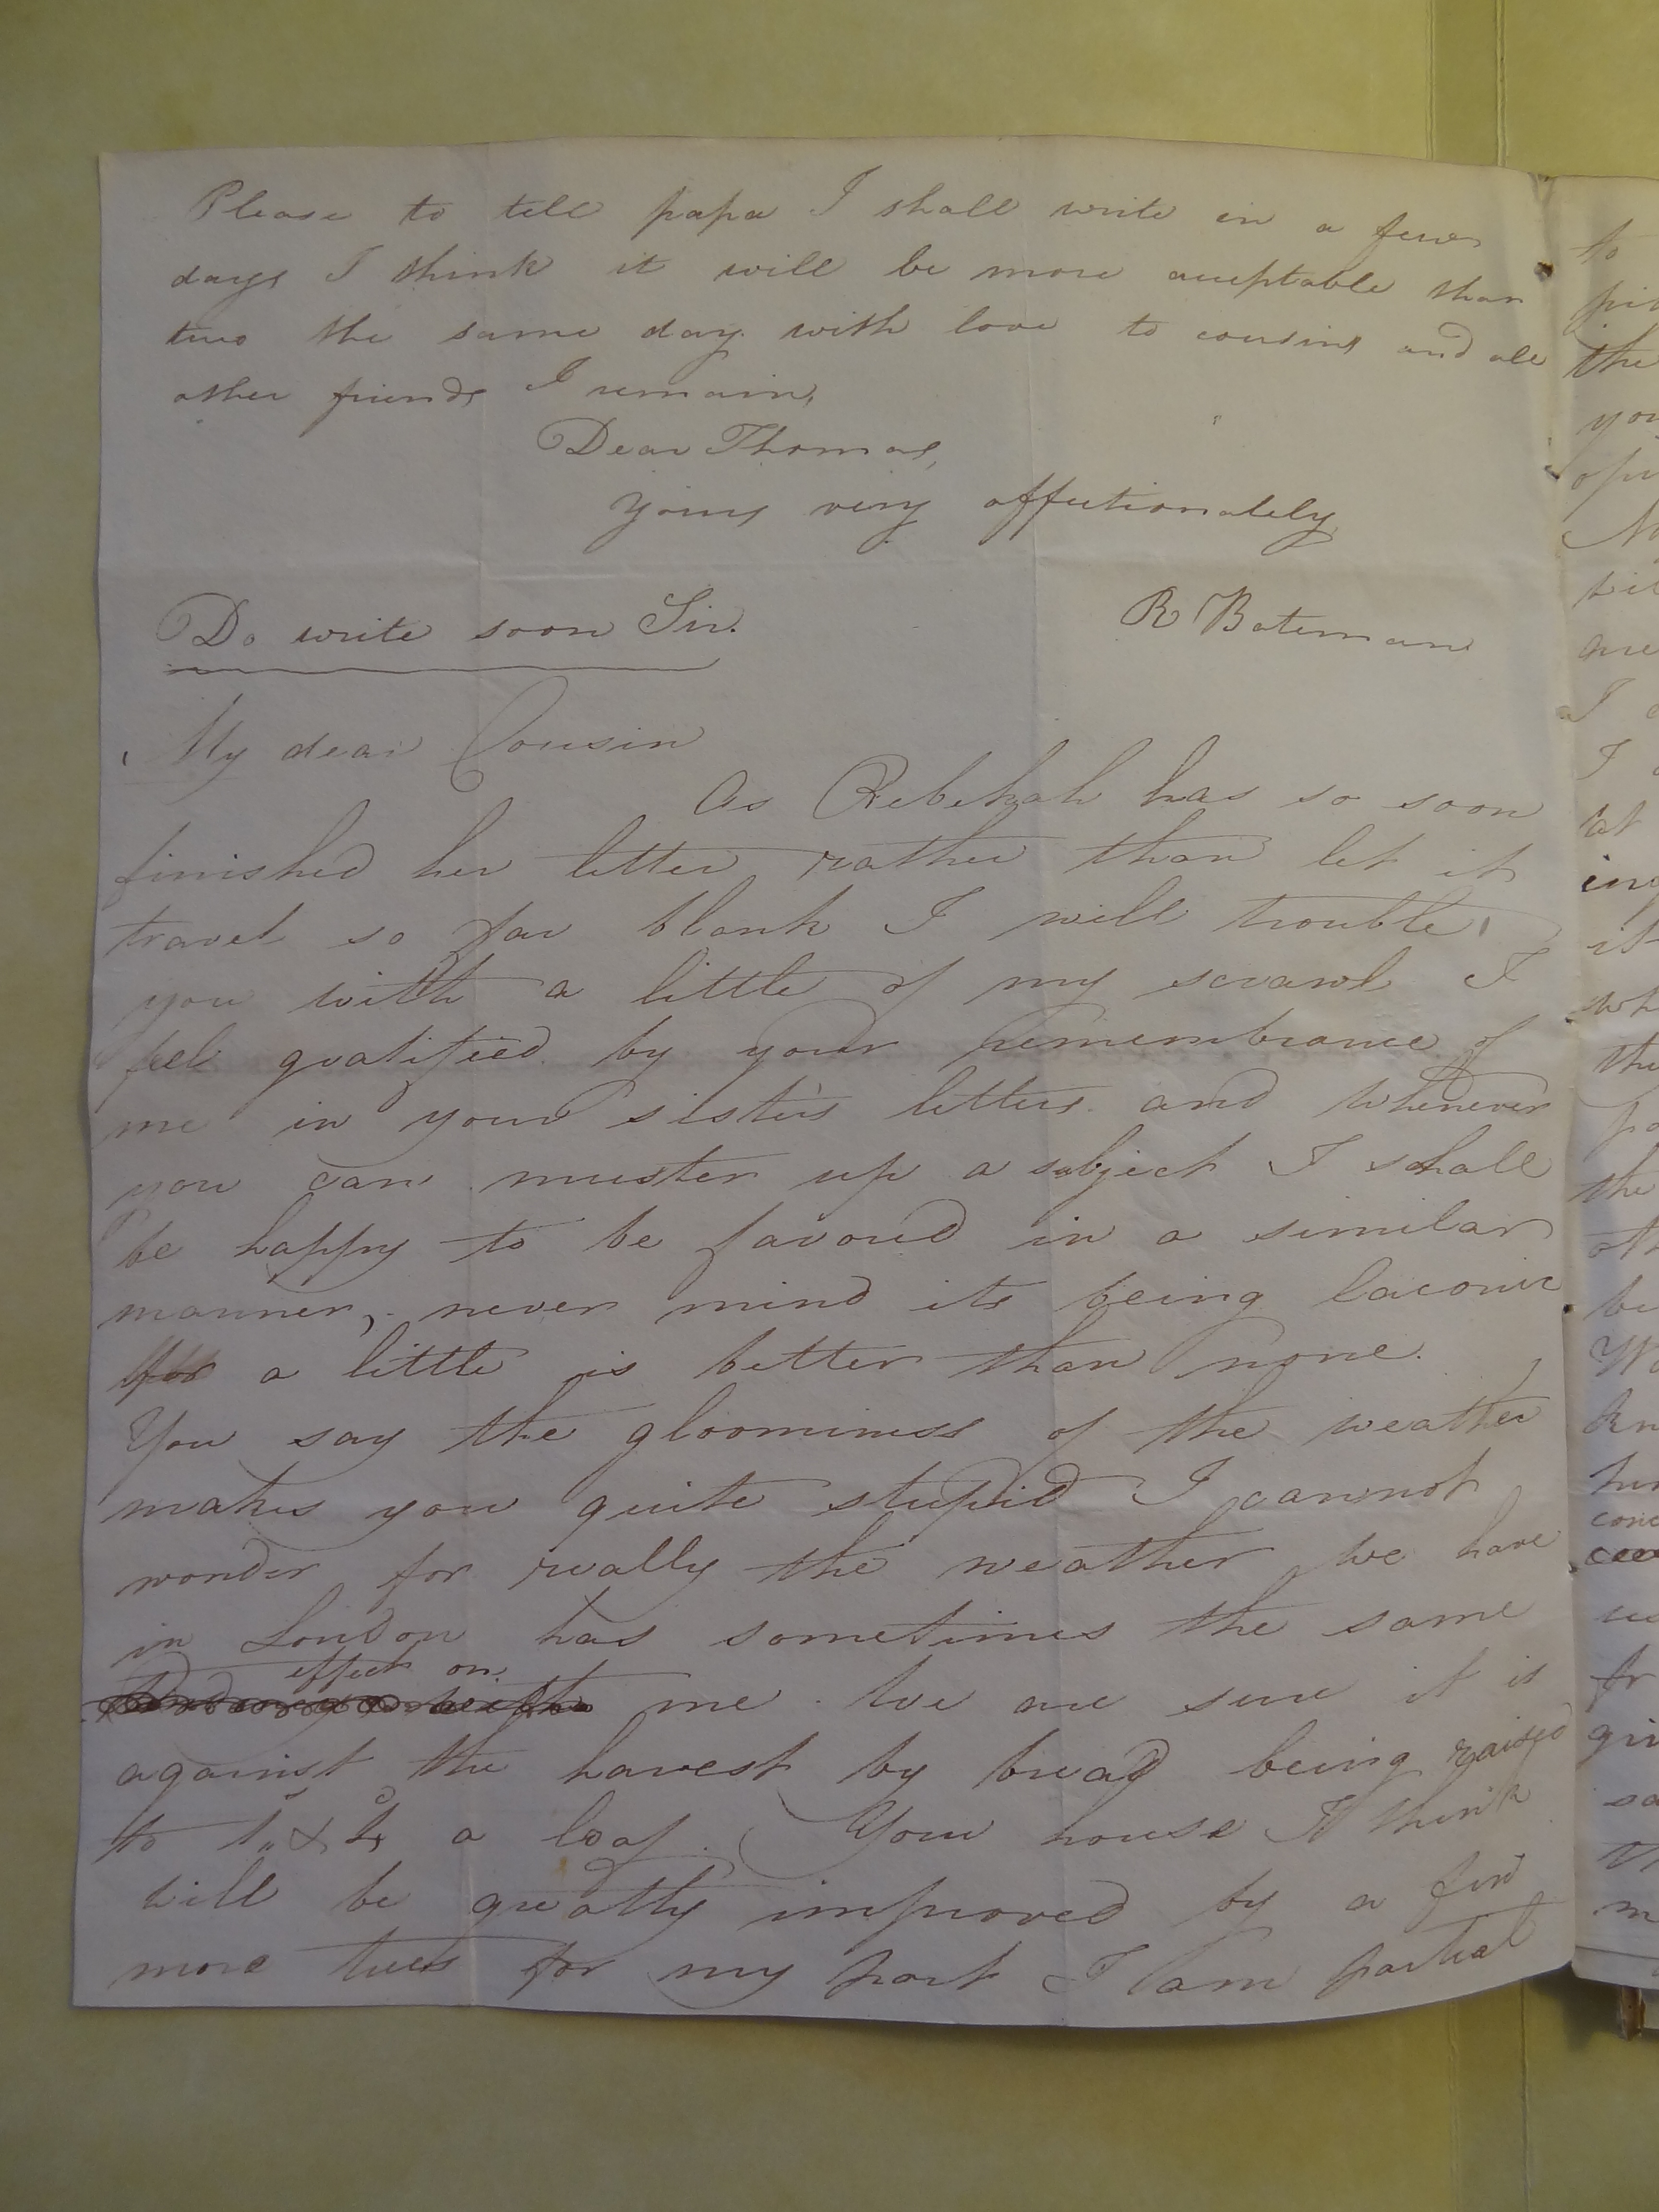 Image #2 of letter: Rebekah Hope and Rebekah Stratten to Thomas Bateman Junior, 25 September 1809